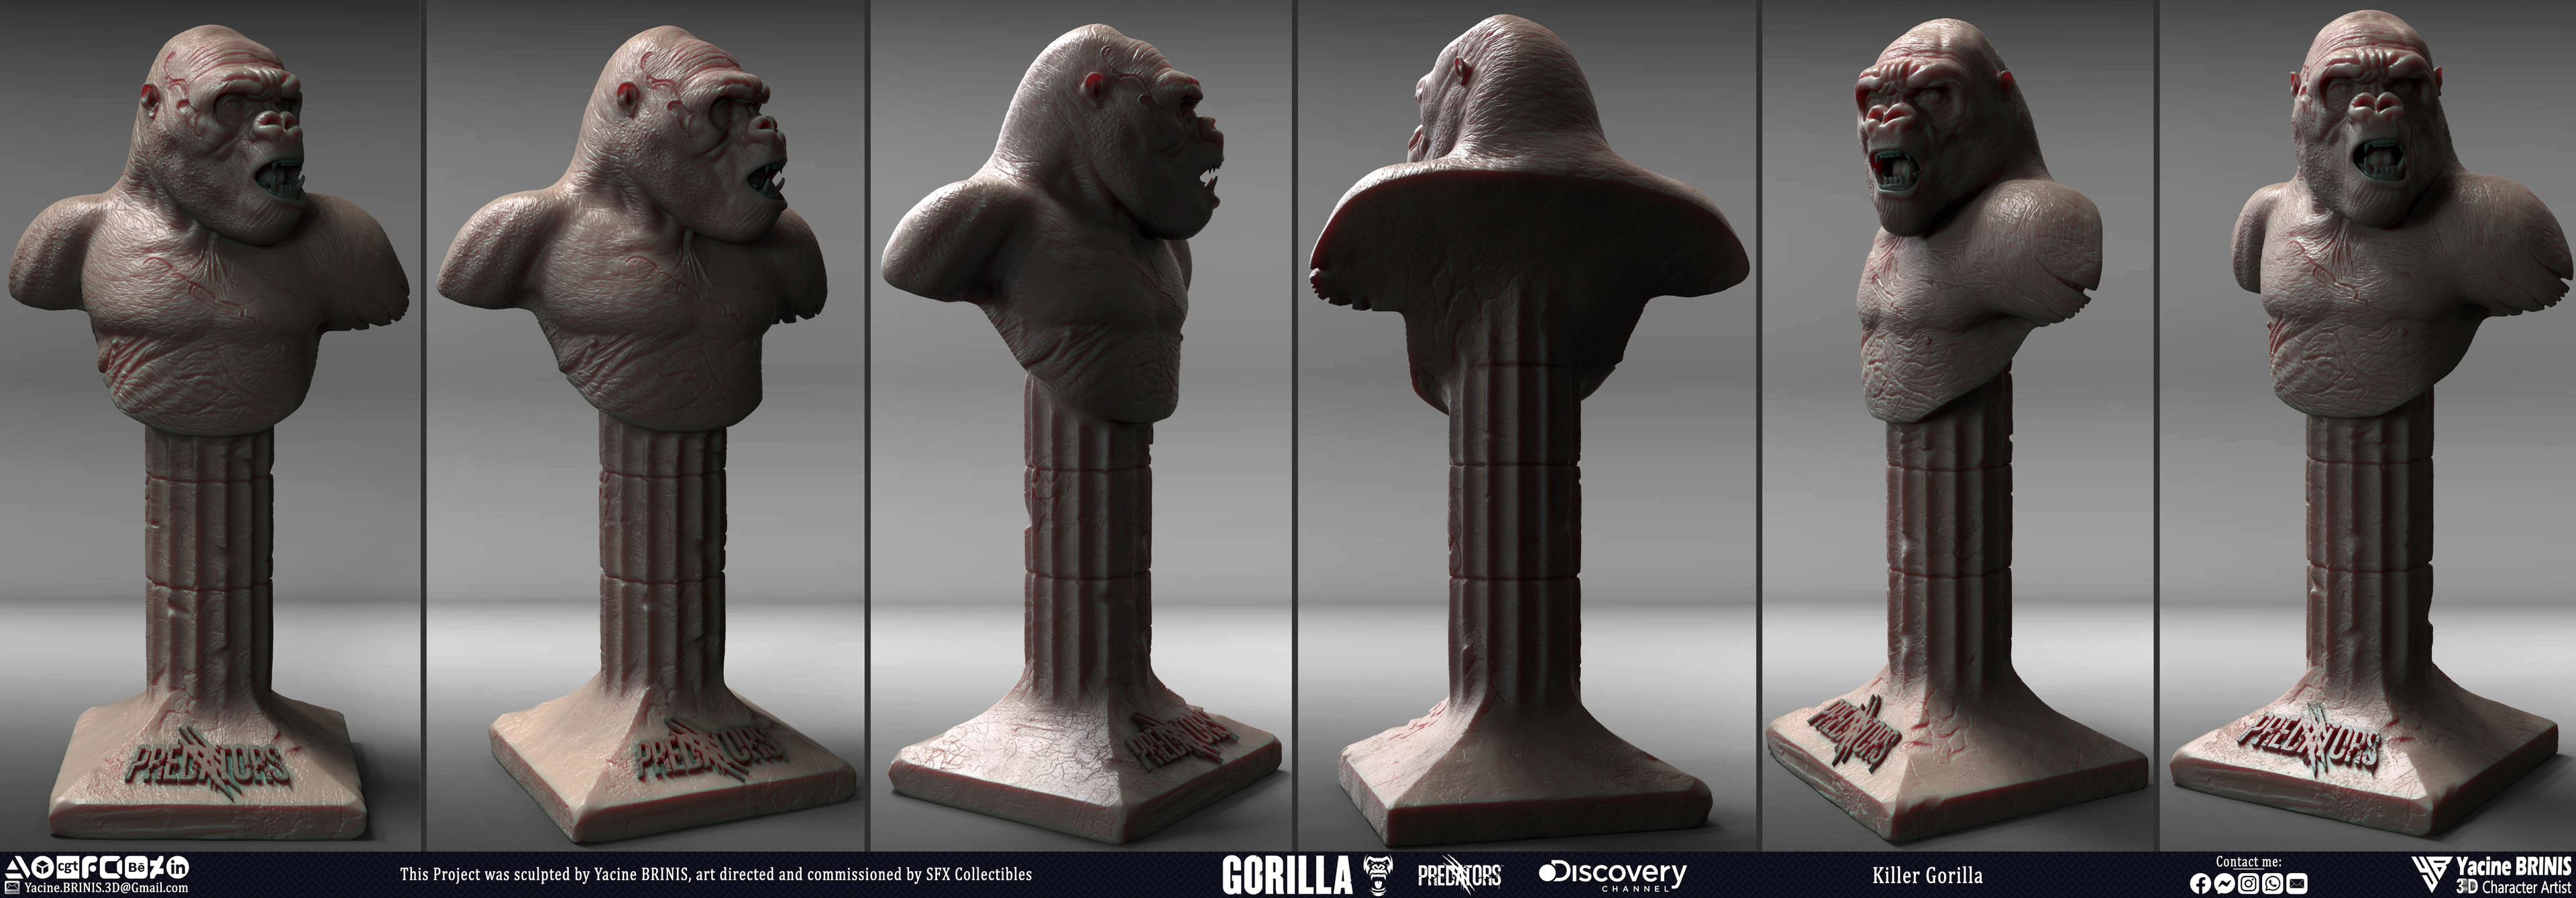 Killer Gorilla Predator sculpted by Yacine BRINIS 019